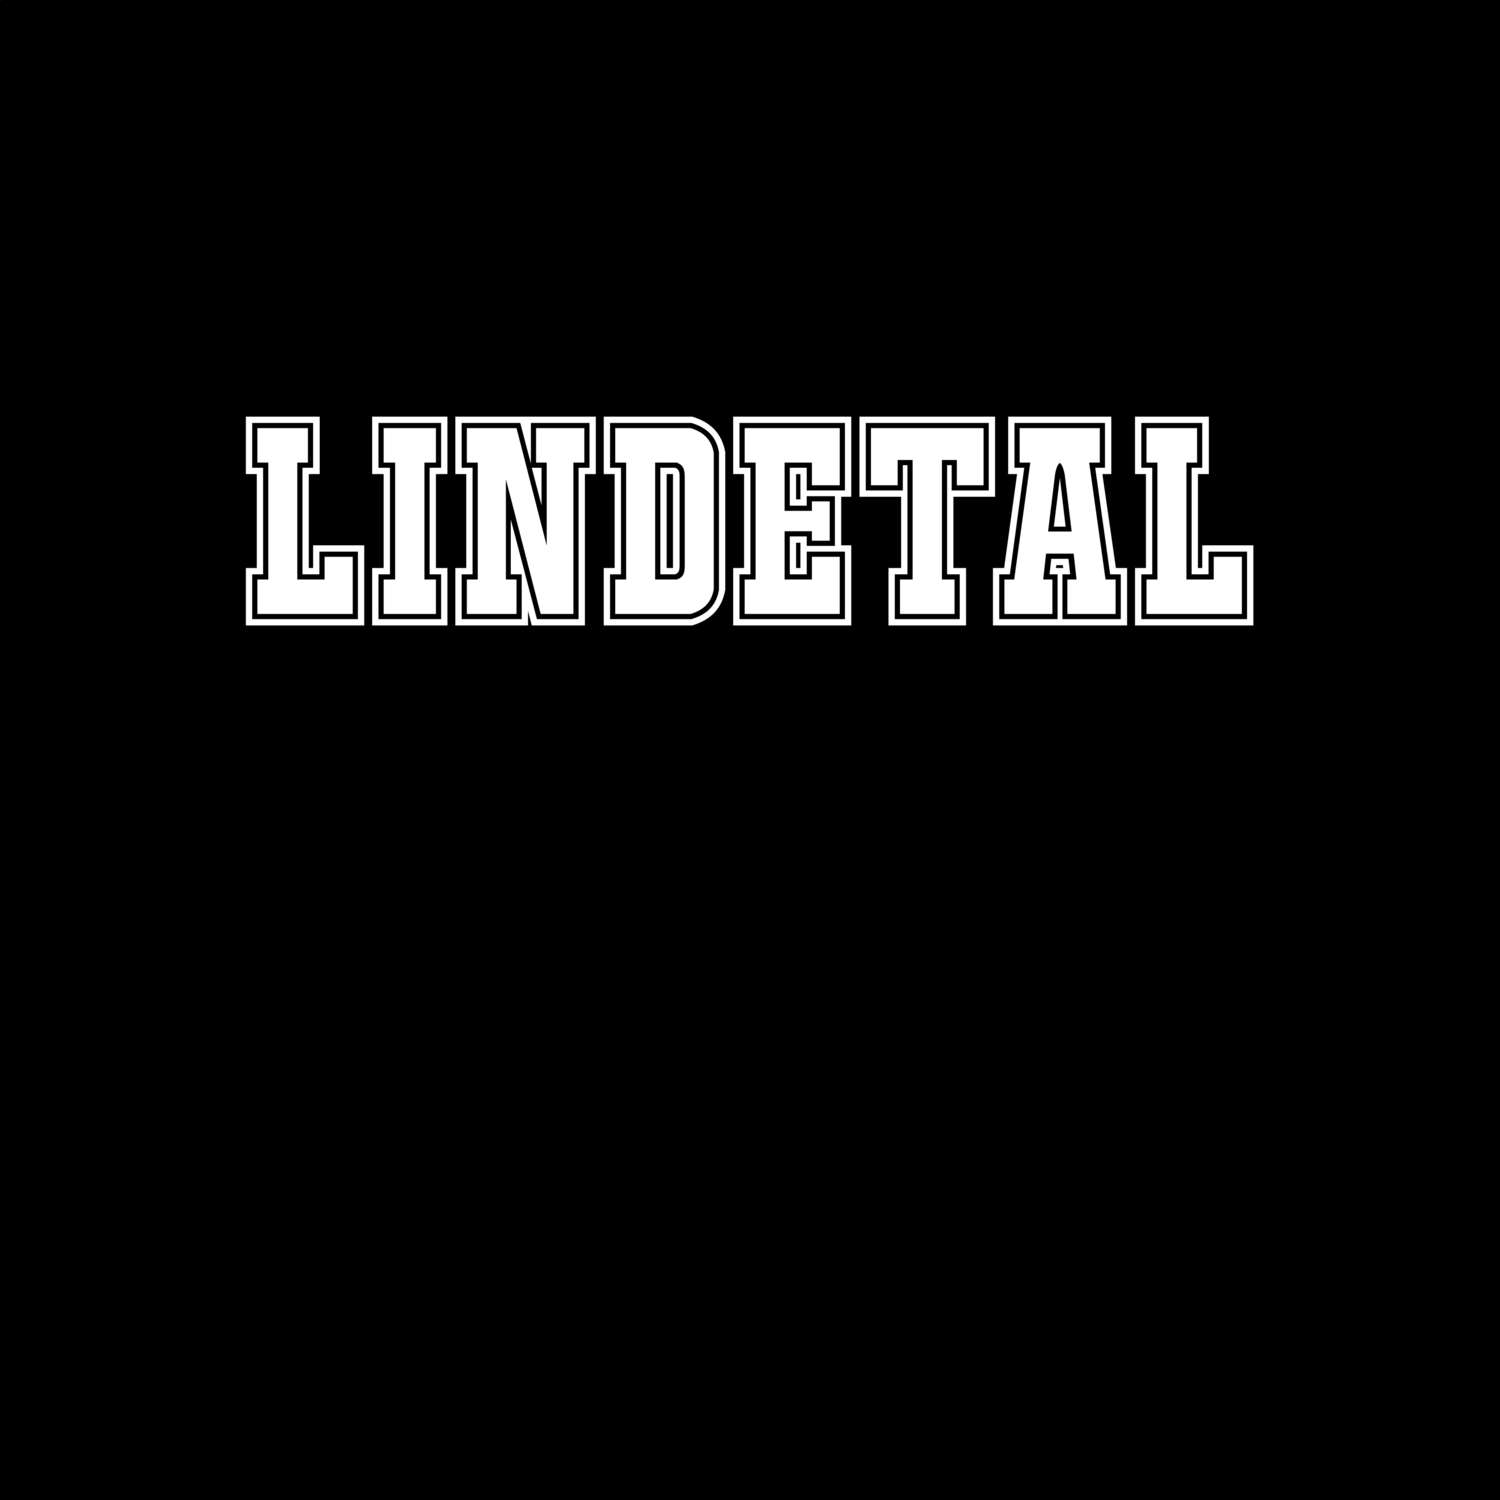 Lindetal T-Shirt »Classic«